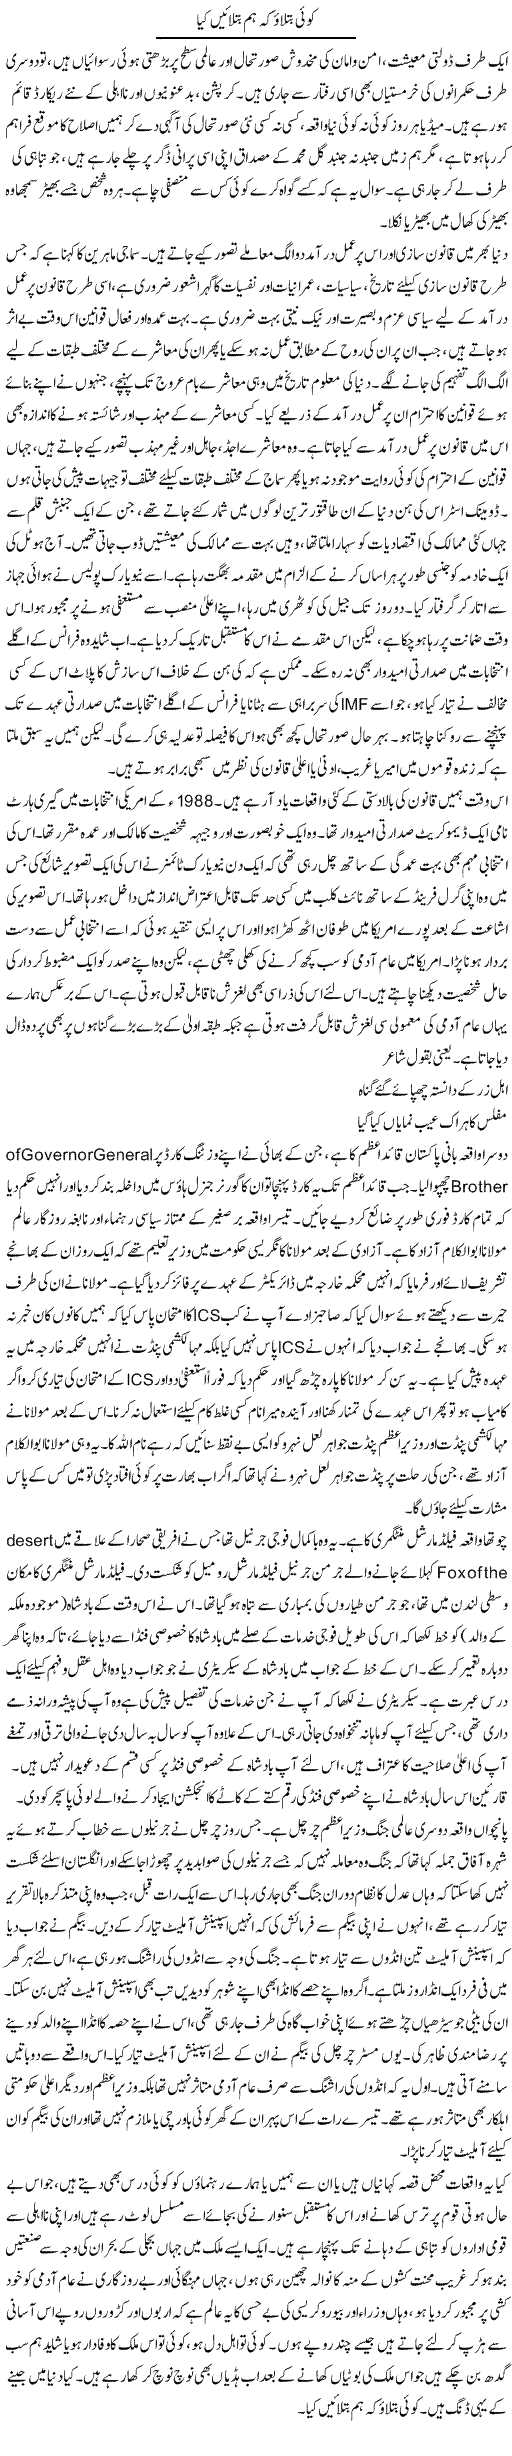 Worse Situation Express Column Muqatada Mansoor 23 May 2011